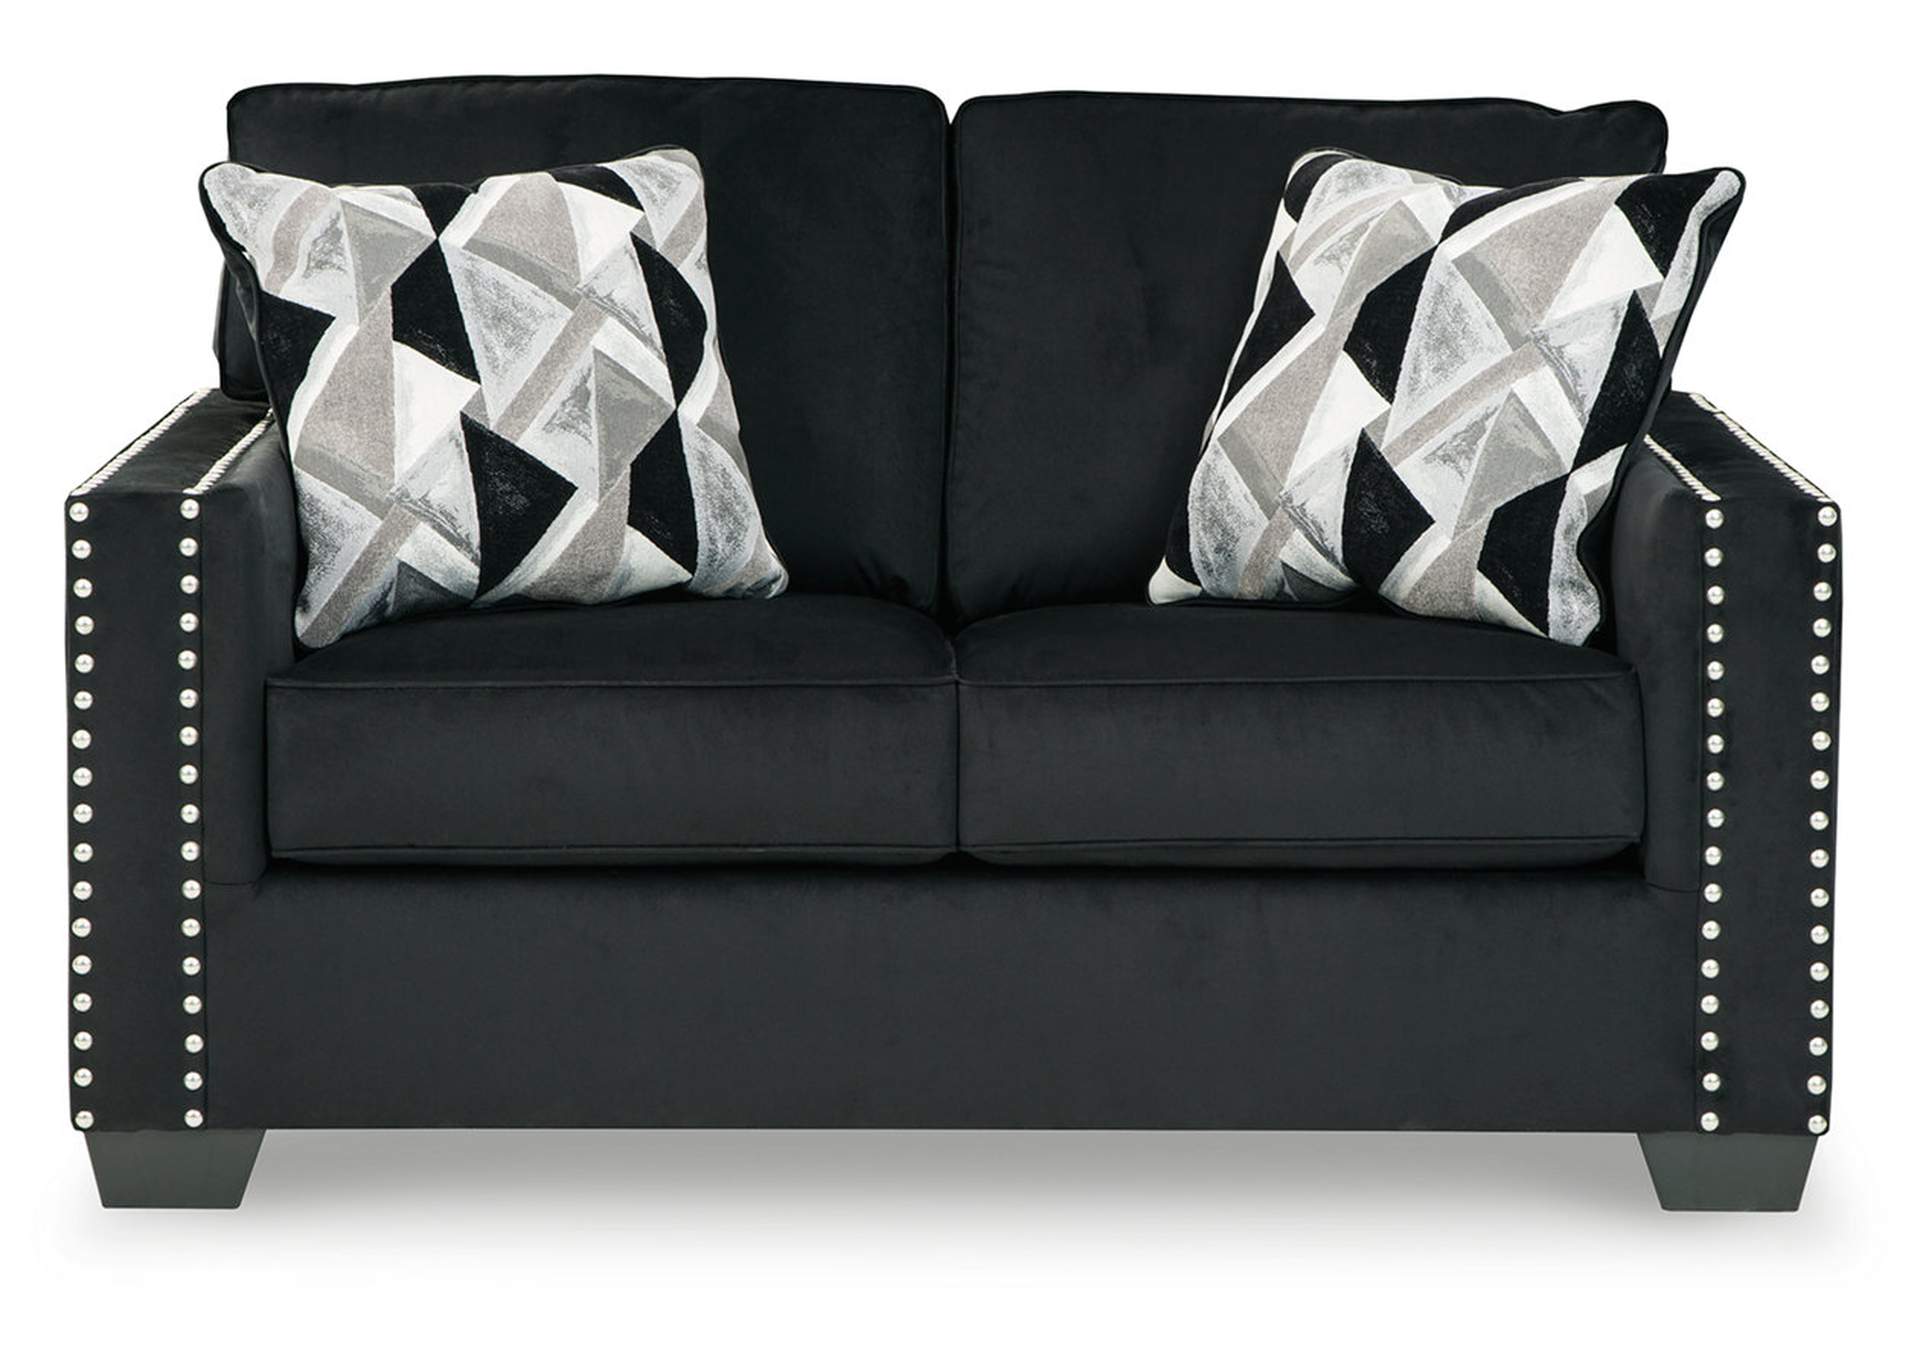 Gleston Sofa, Loveseat, Chair, and Ottoman,Signature Design By Ashley